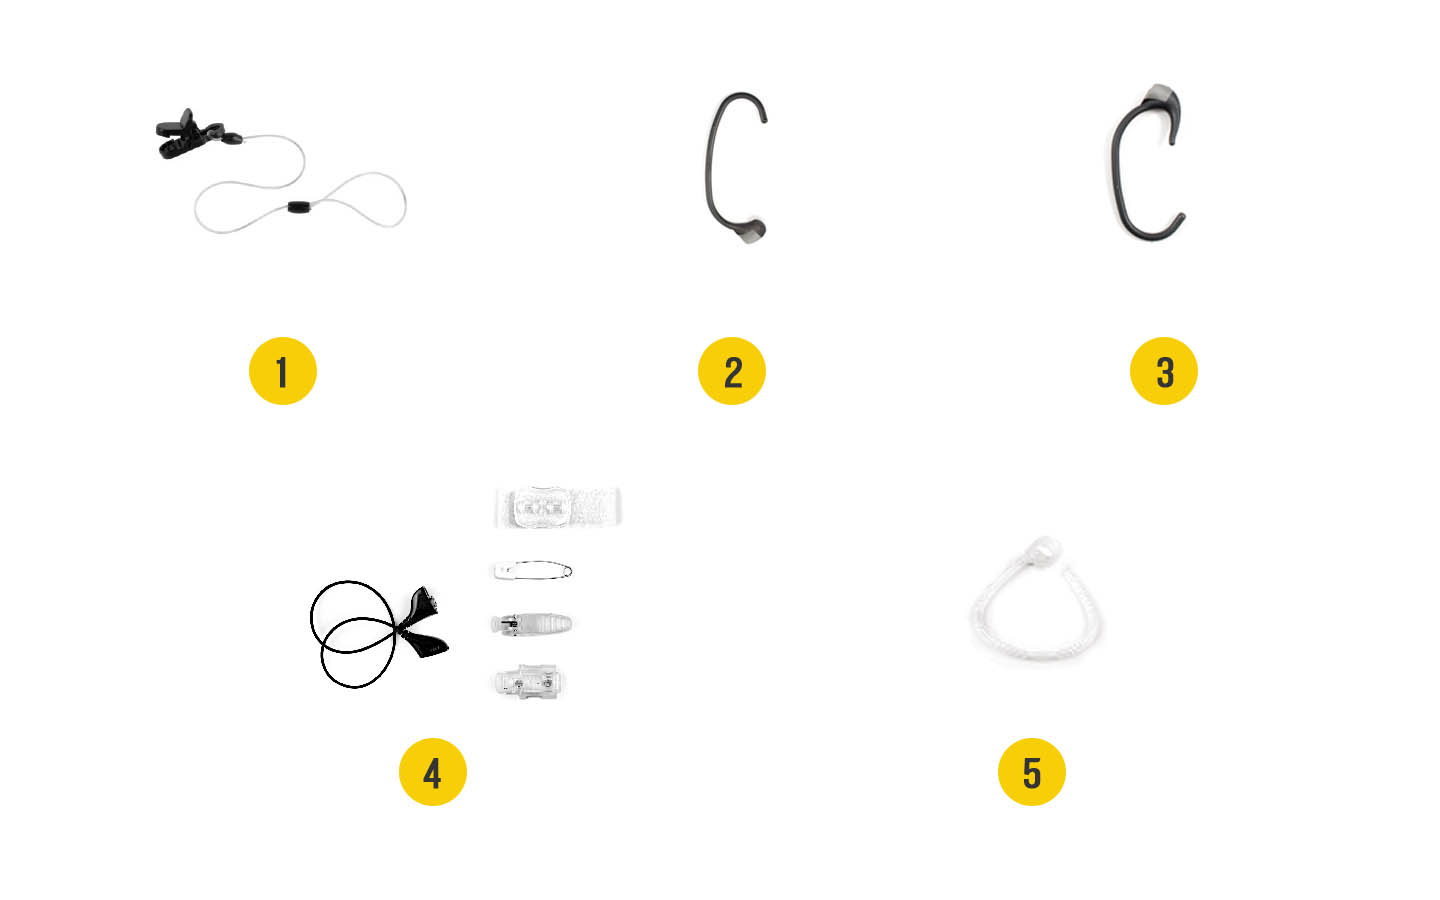 Kuva Baha-puheprosessorin lisävarusteista: 1.  Hauenleukakiinnike ja pitkä varmuusnauha, 2. Earhook+-korvakoukku, 3. Snugfit, 4. Litewear, 5. Mic Lock